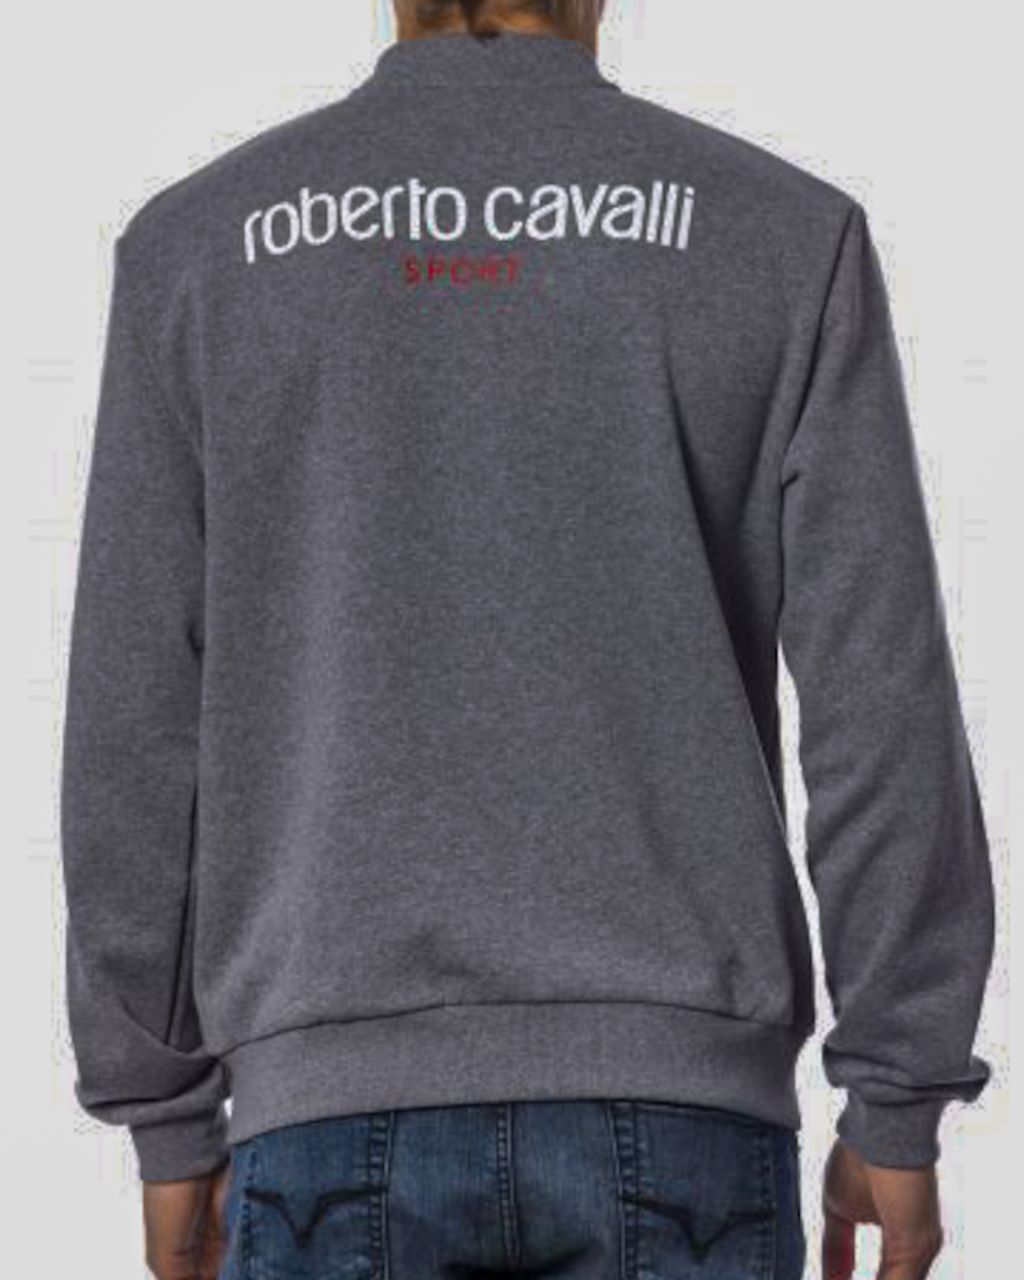 bluza bomberka RCavalli - Roberto Cavalli  Sport zdjęcie 4